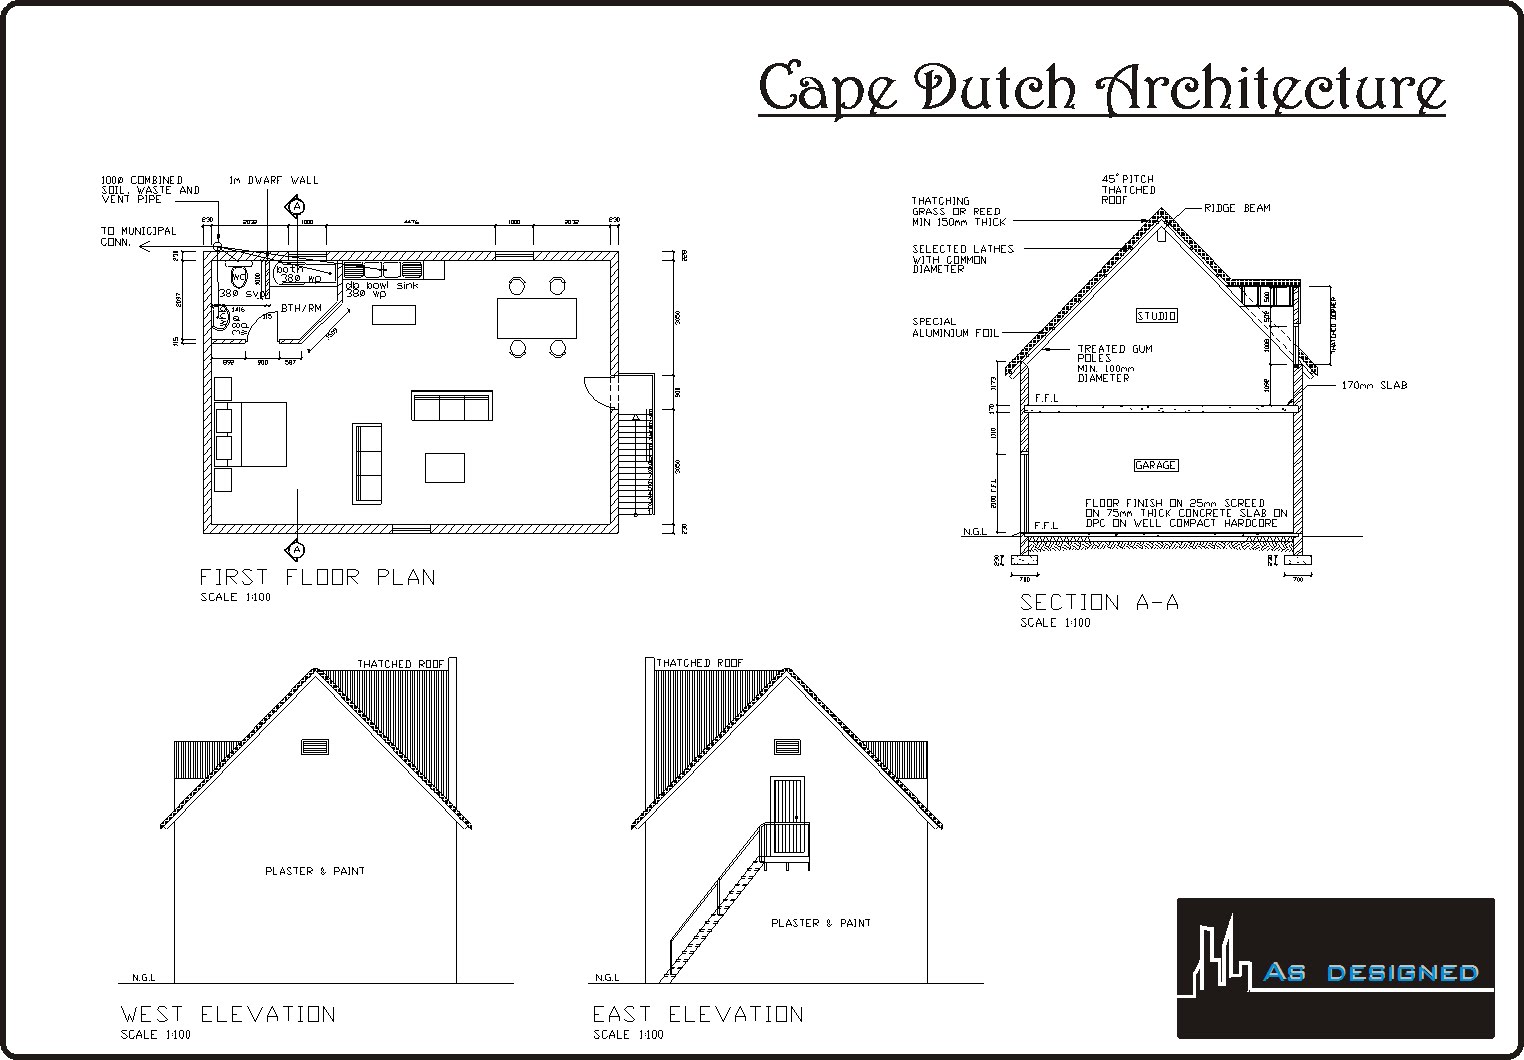 Download this Cape Dutch Architecture picture